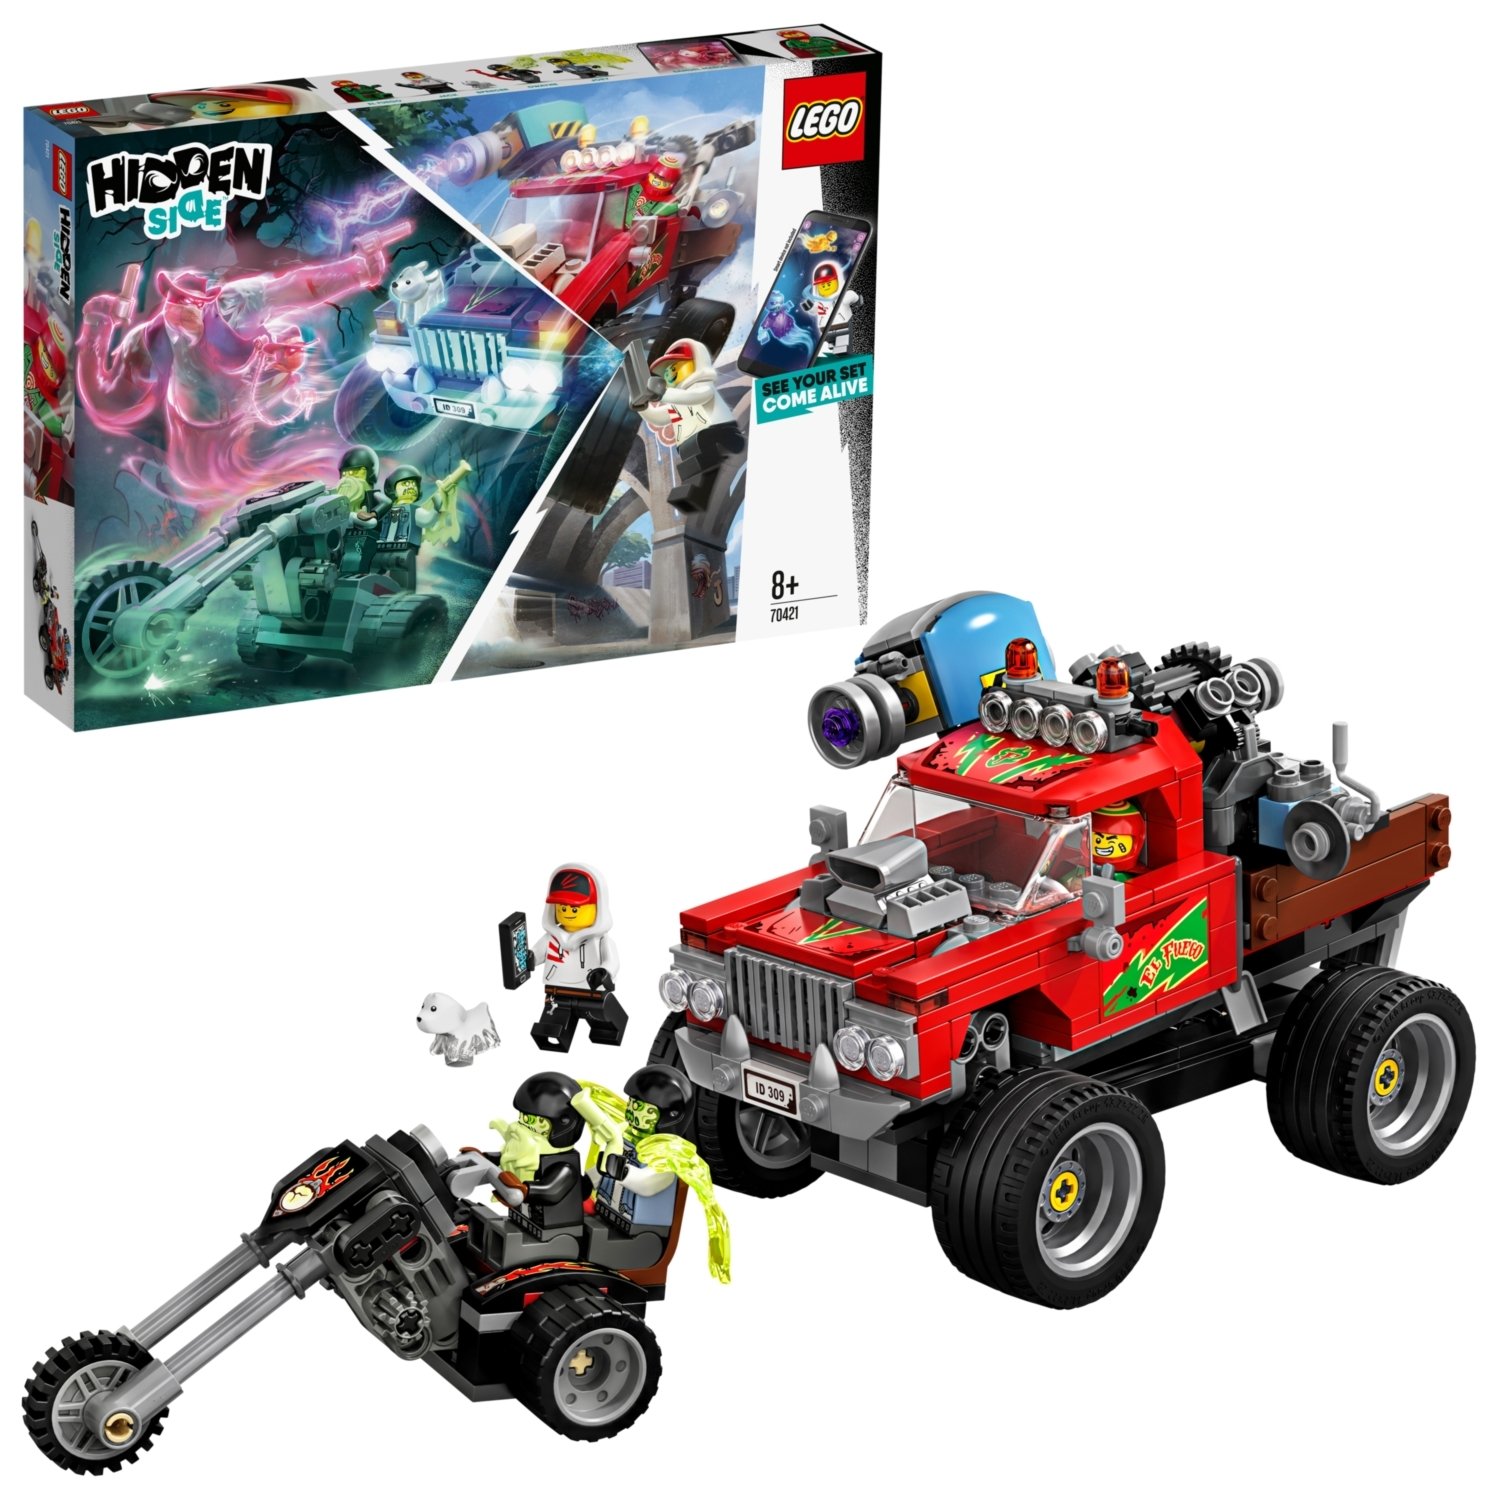 LEGO Hidden Side El Fuego's Stunt Truck AR Games Set - 70421